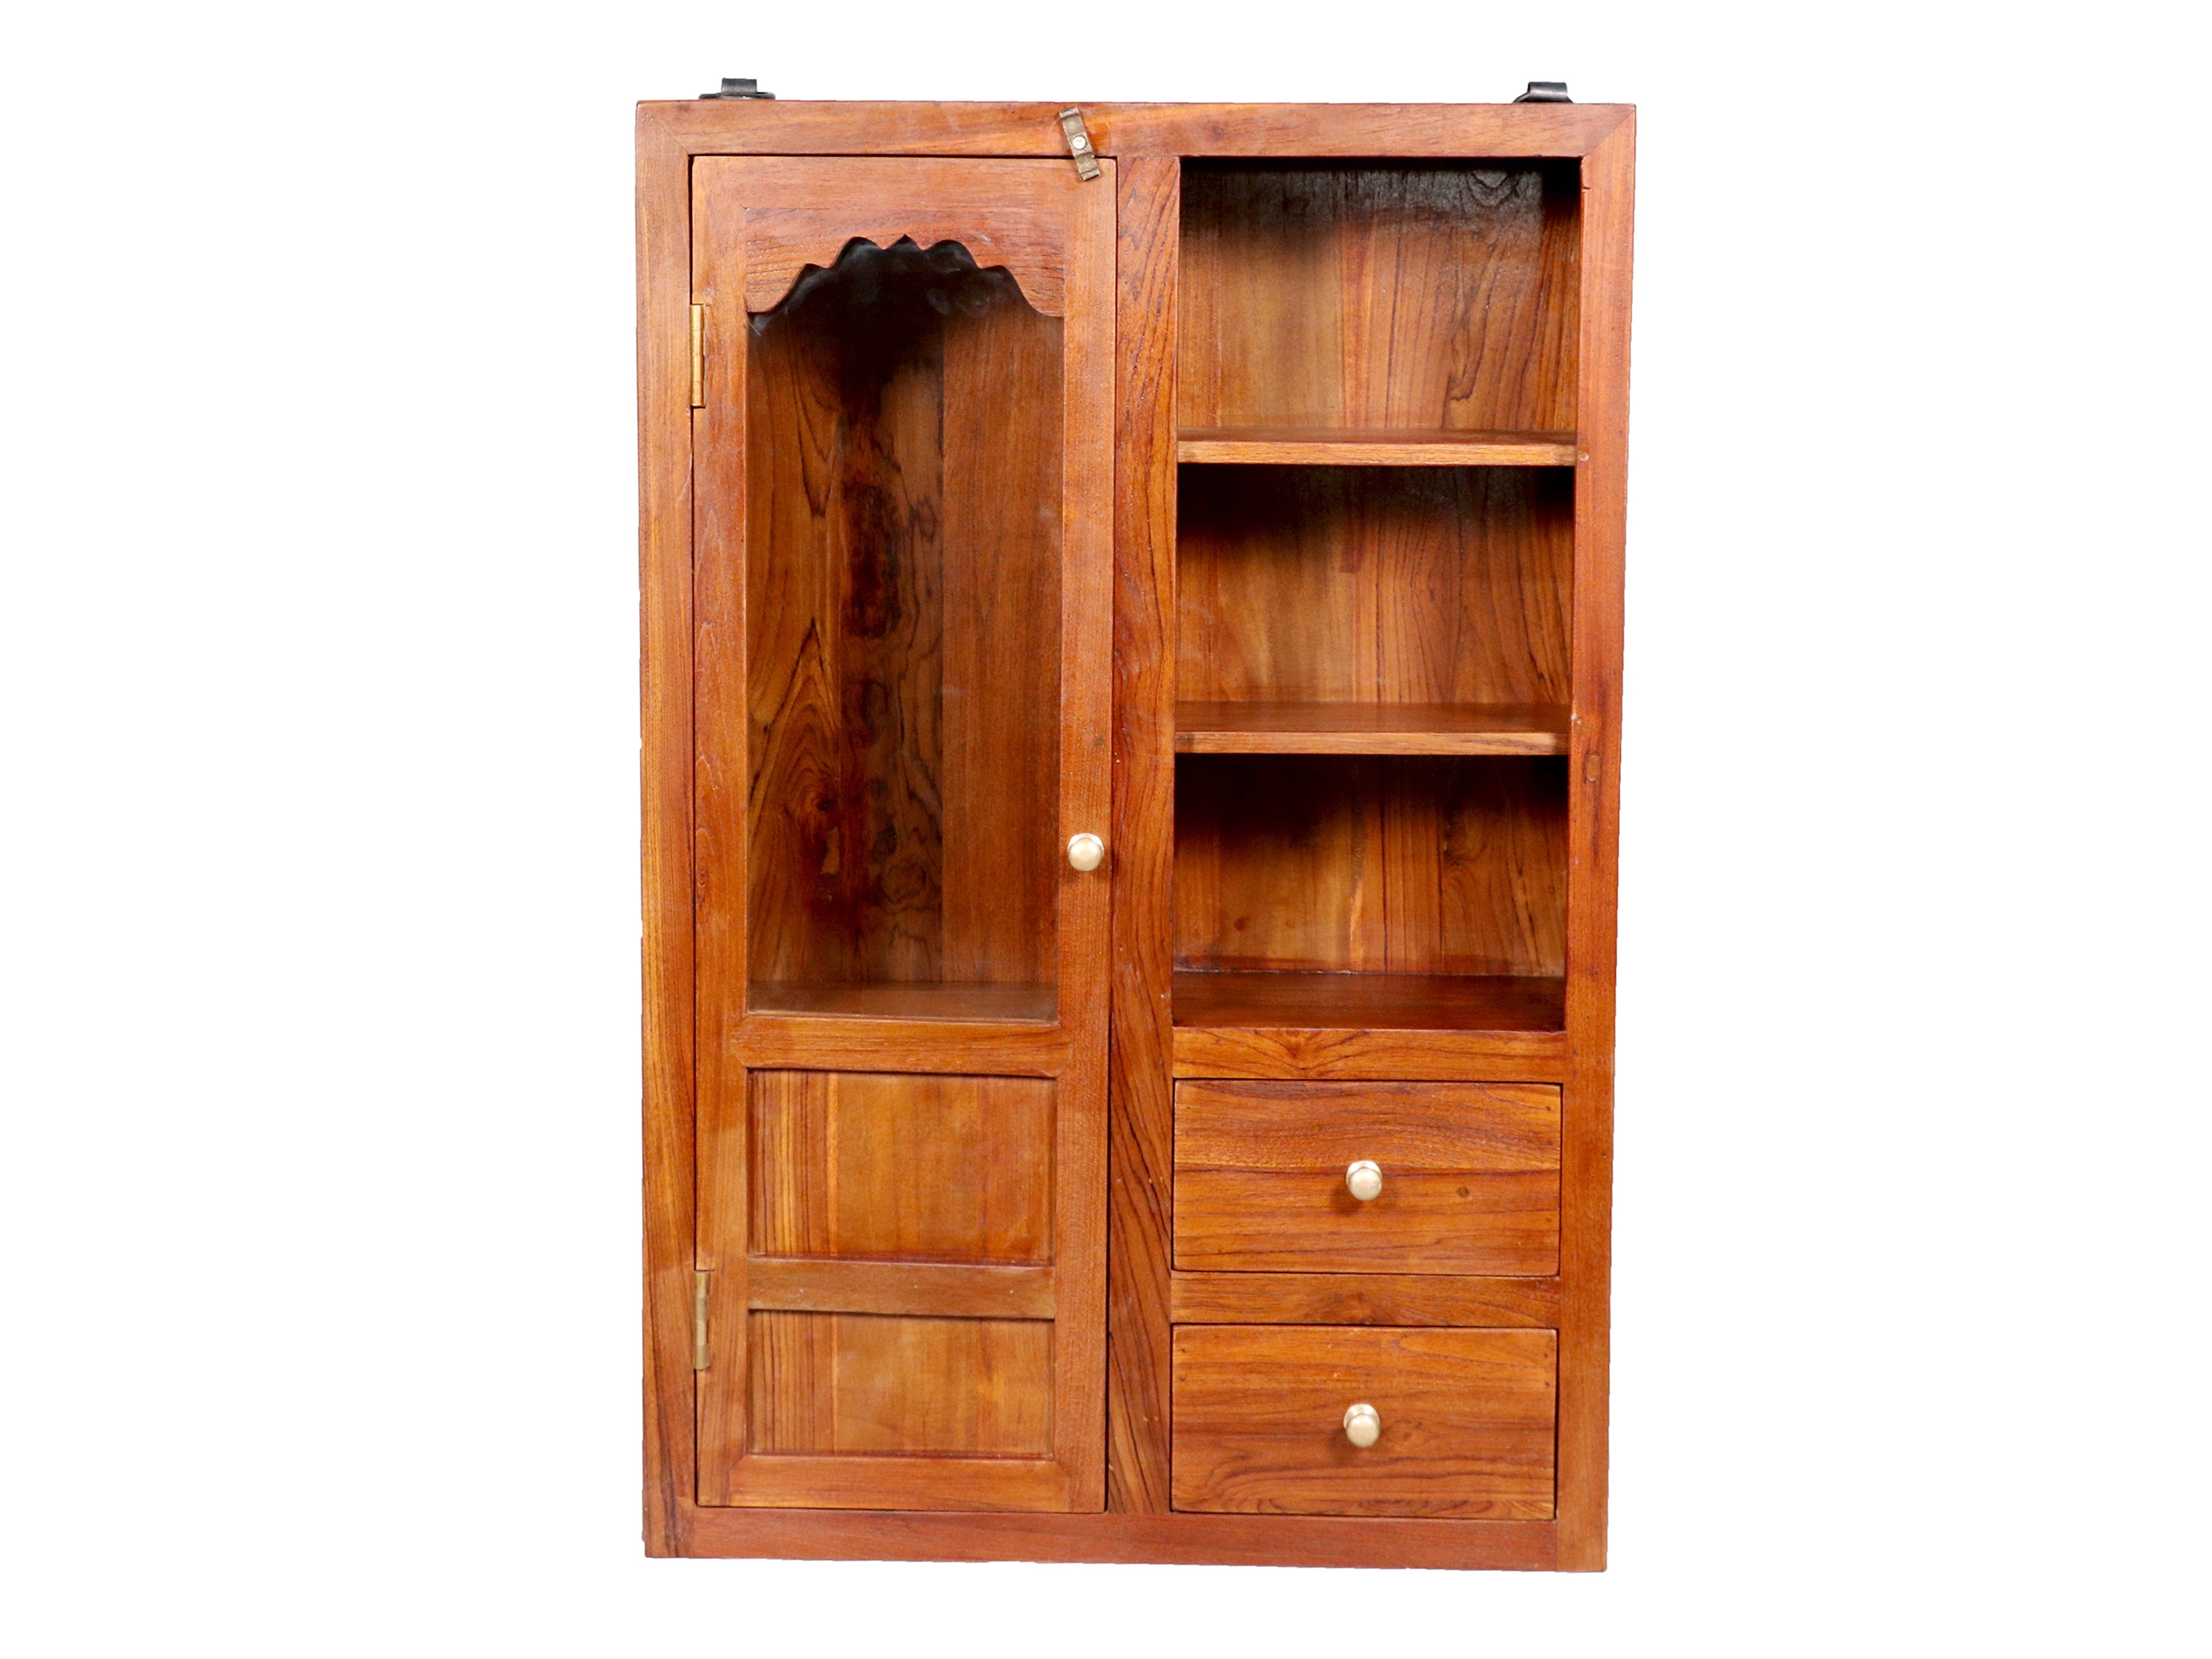 1 Door 3 Shelf with 2 Drawers Wooden Teak Wall Cabinet Wall Cabinet